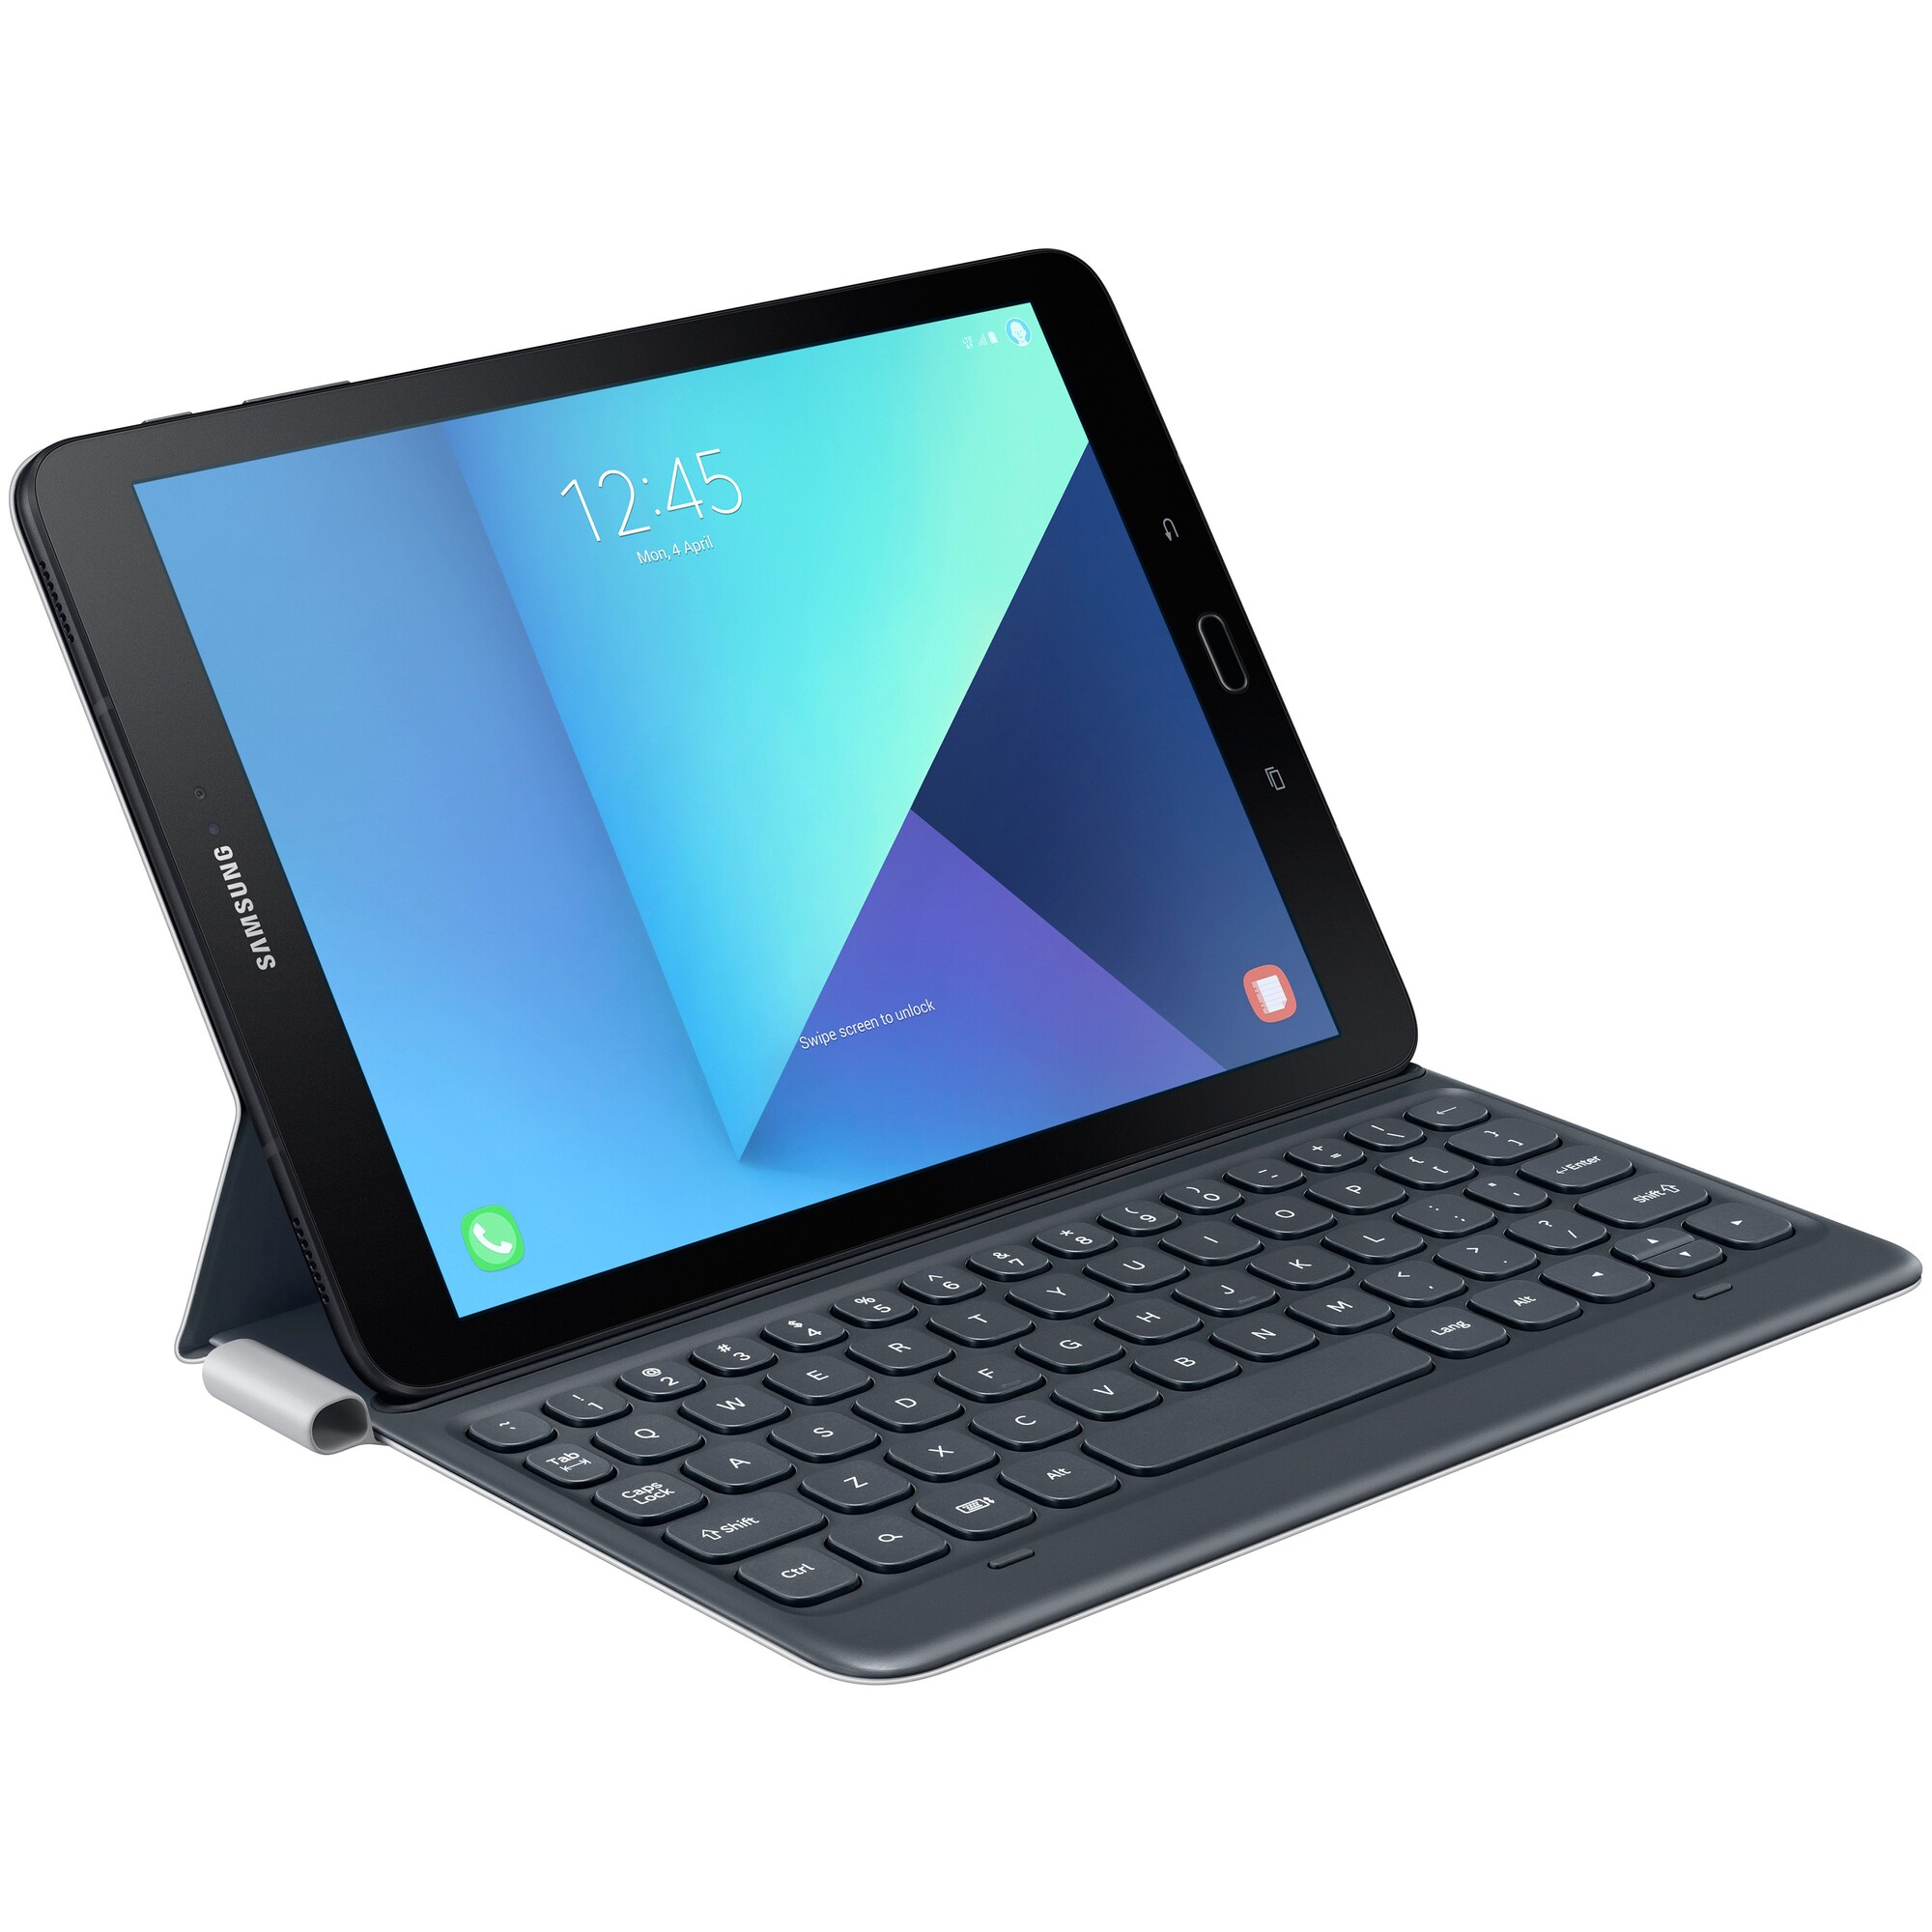 Samsung Galaxy Tab S3 cover m. tastatur - sort/grå - iPad og tablet tilbehør  - Elgiganten